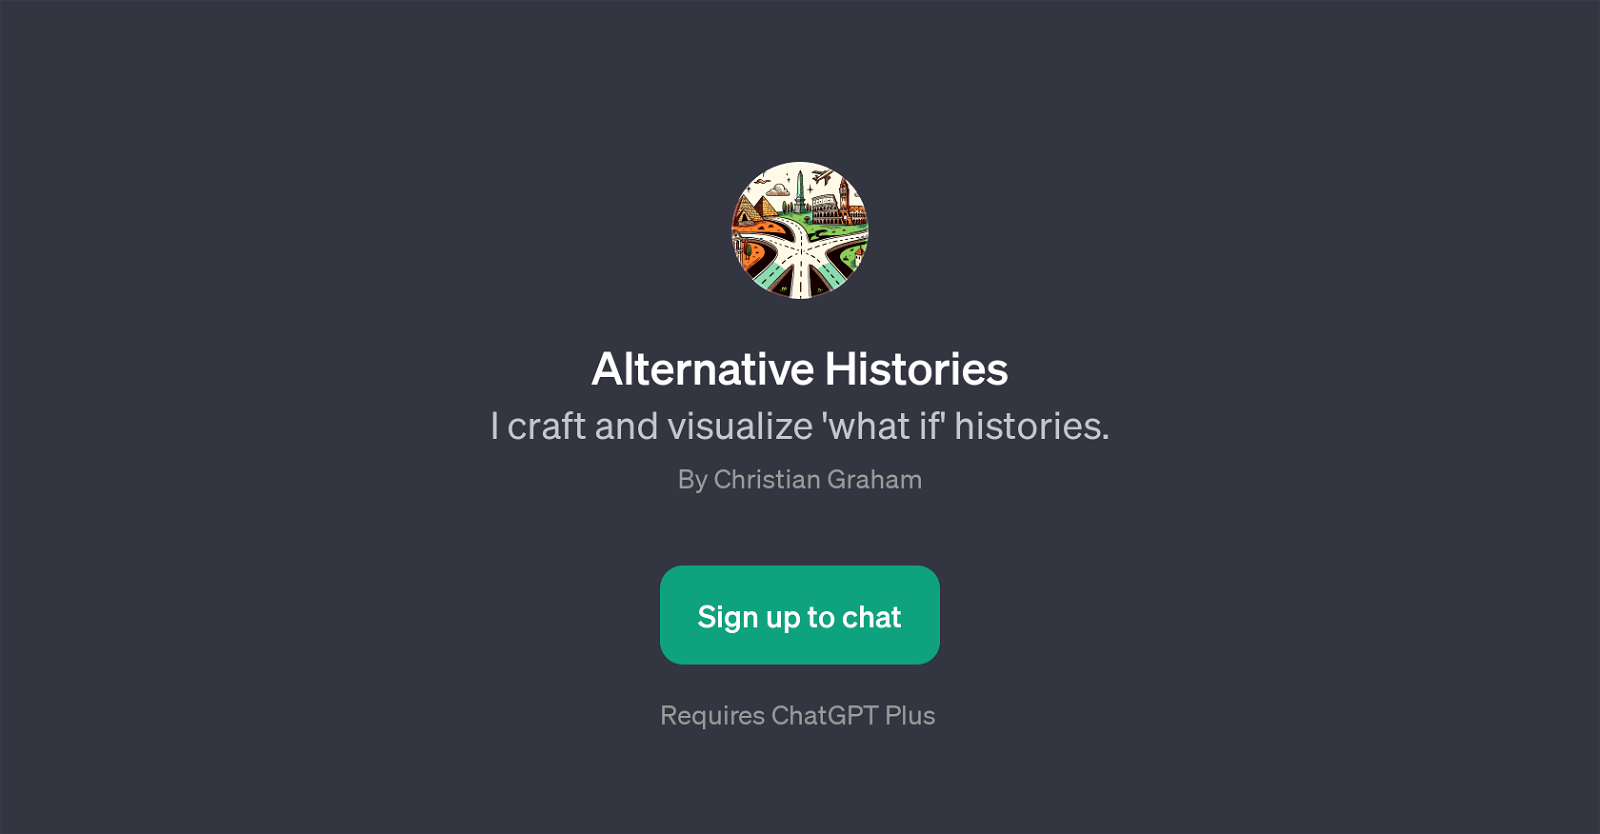 Alternative Histories website